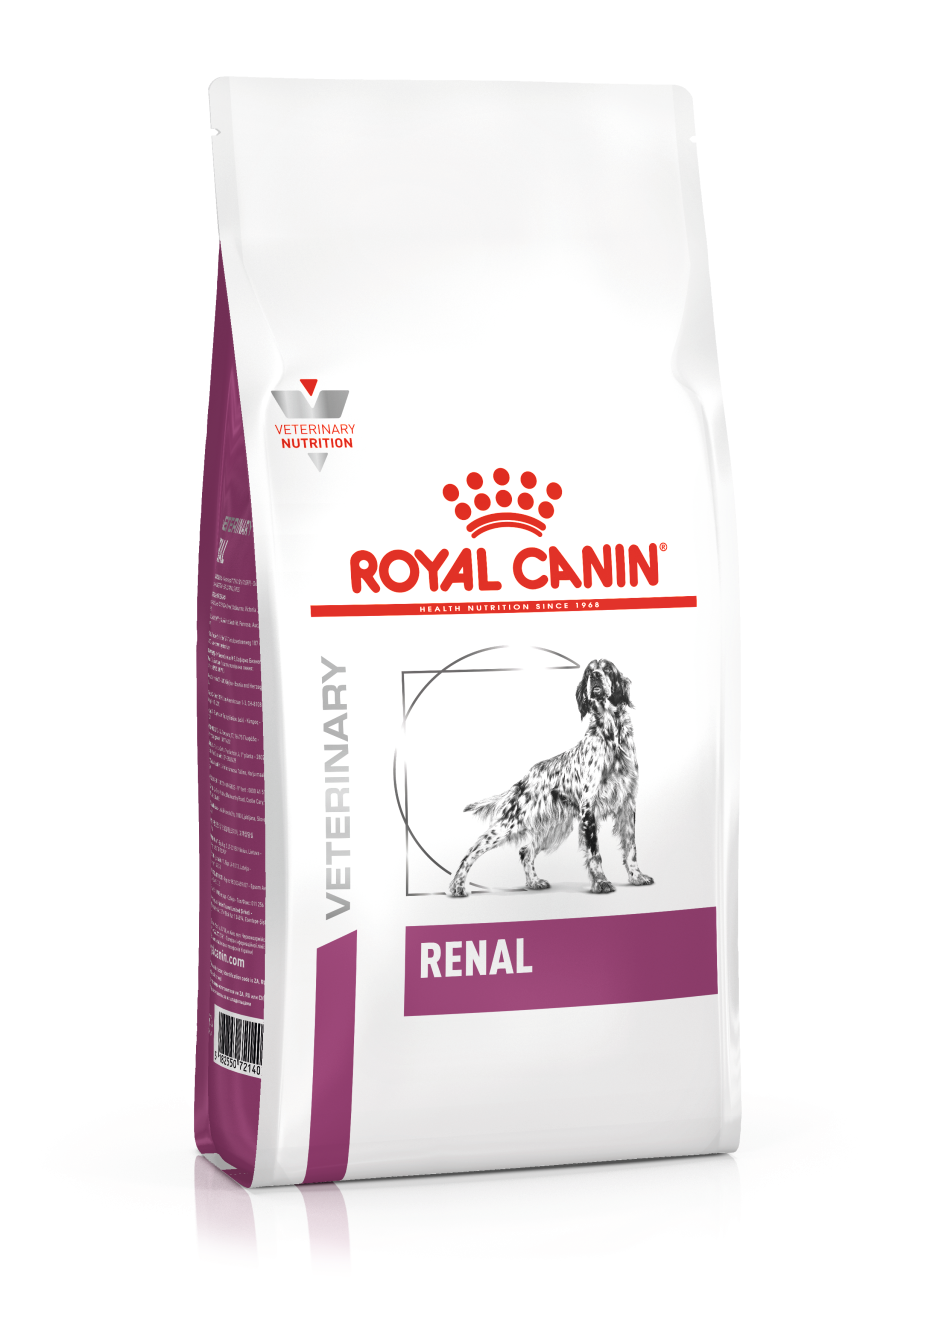 Royal Canin Renal hond <br> 2x 2 kg